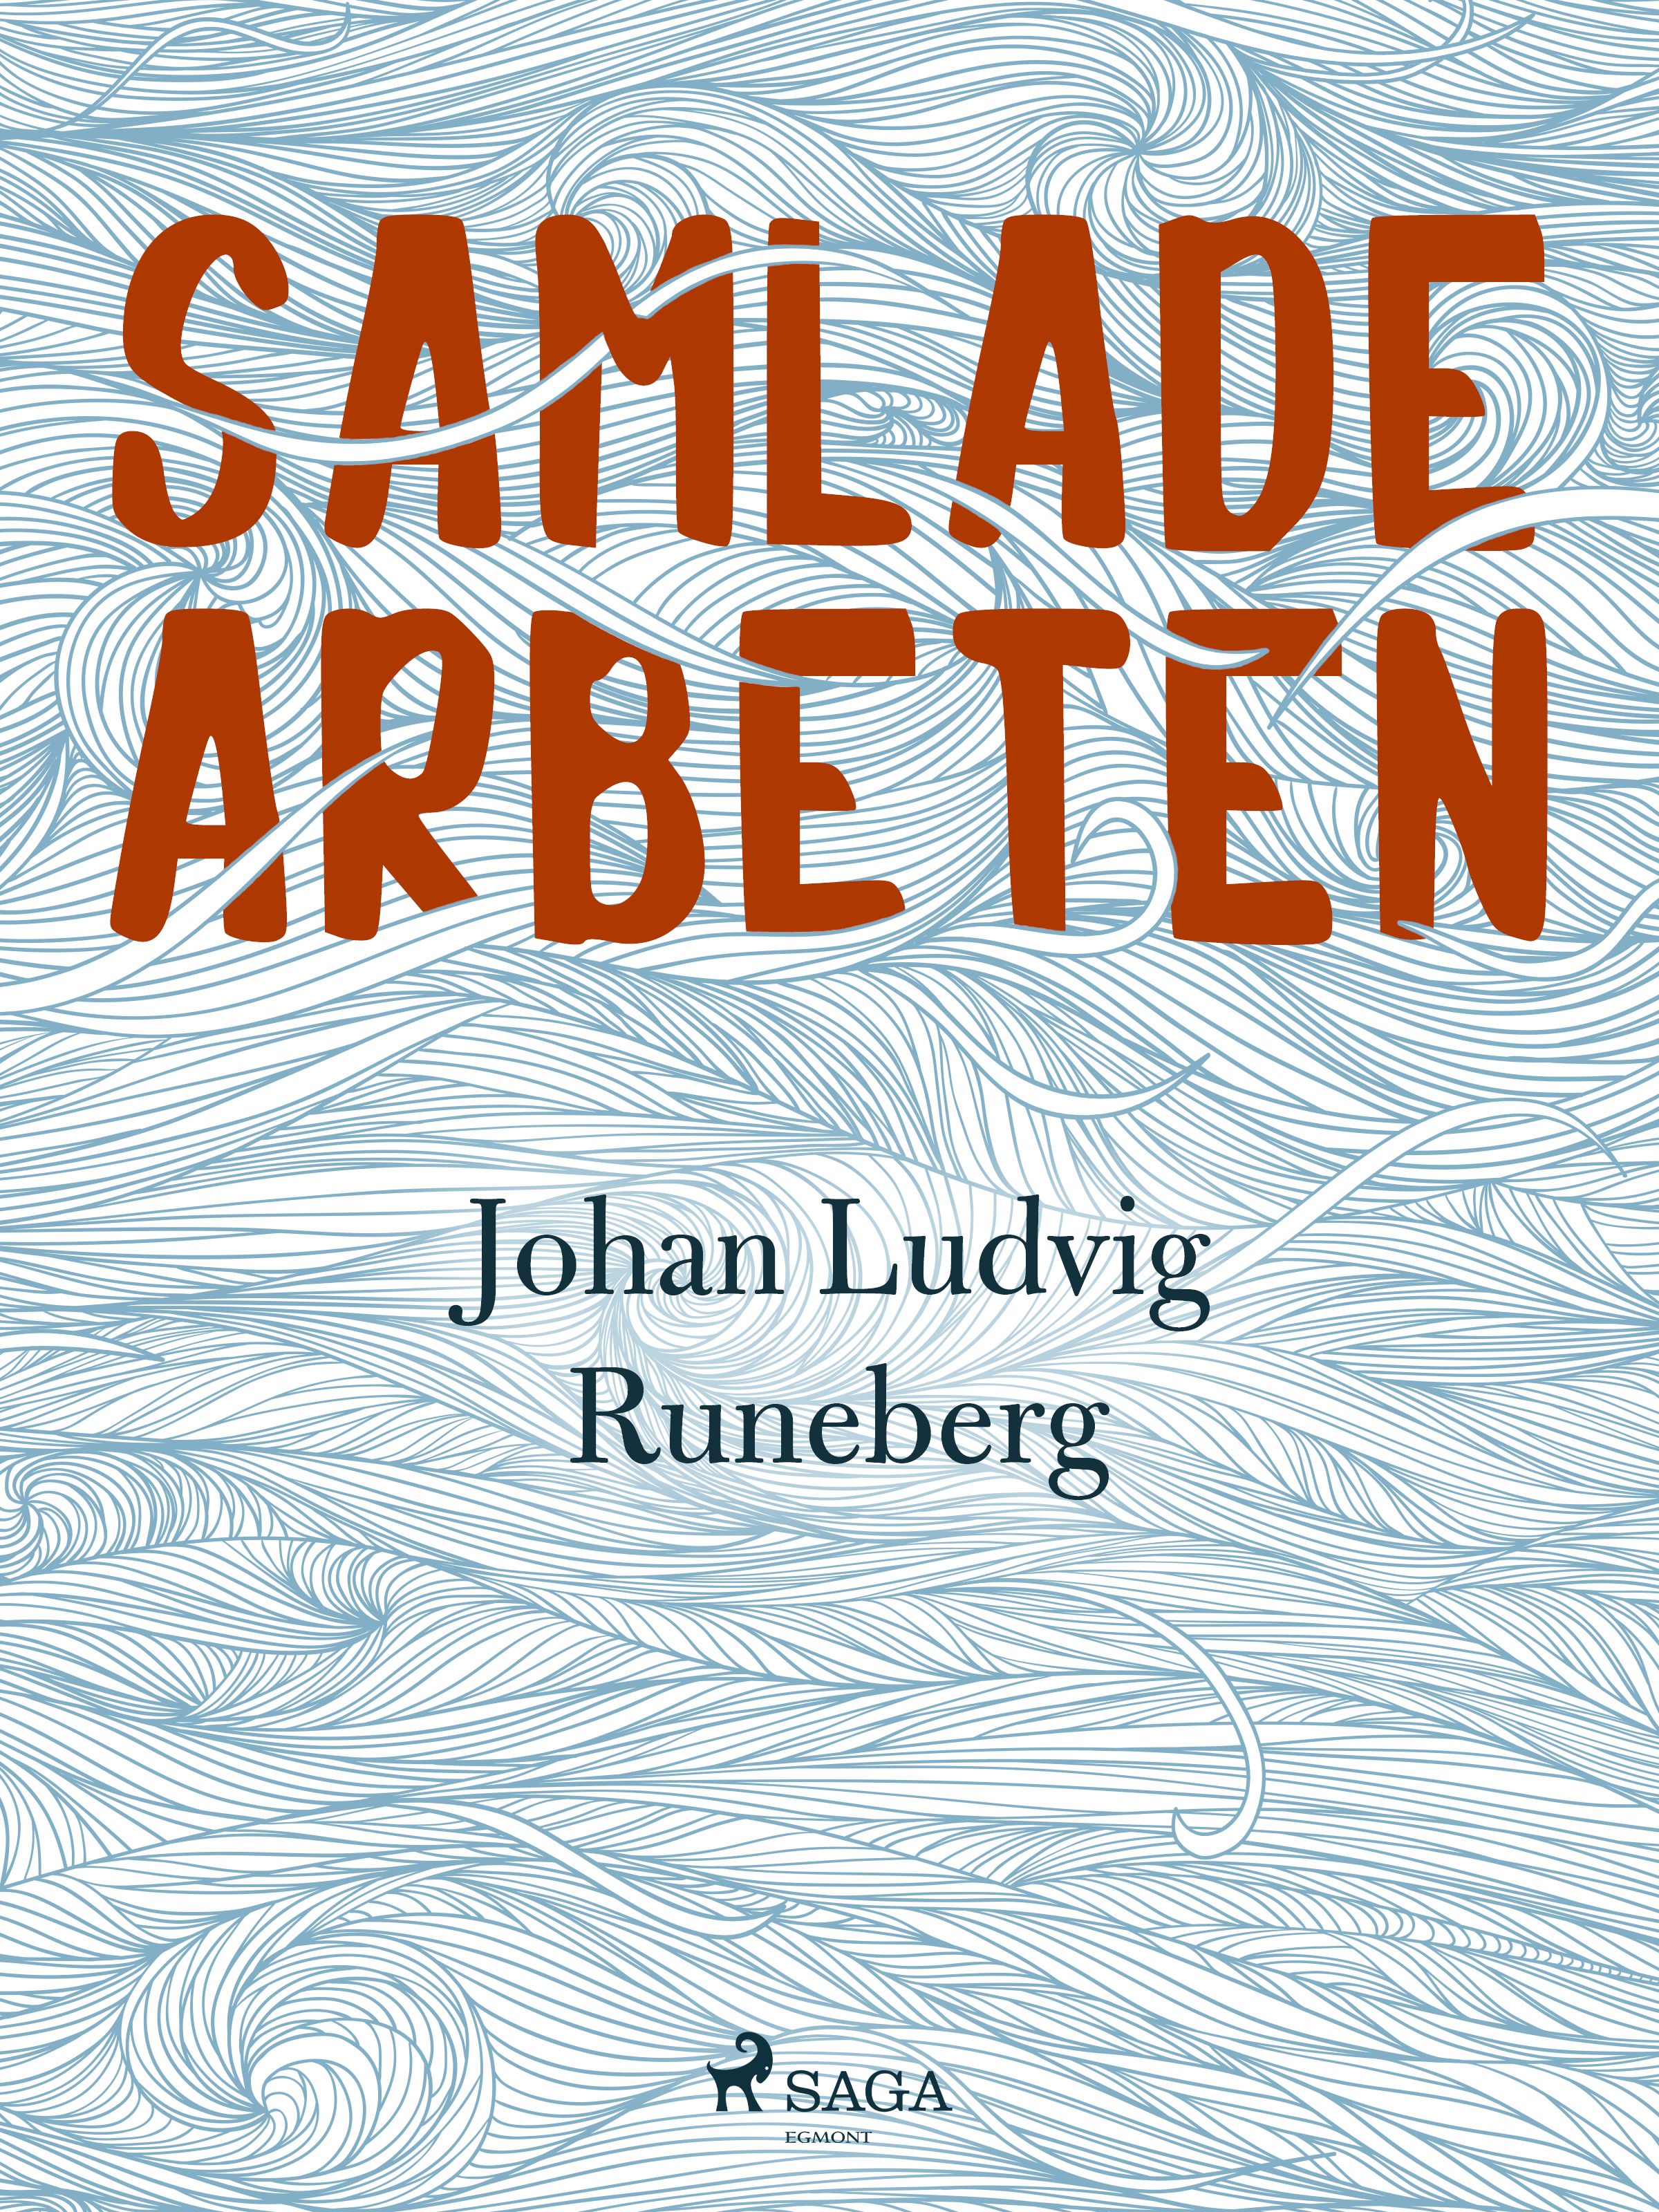 Samlade Arbeten, eBook by Johan Ludvig Runeberg